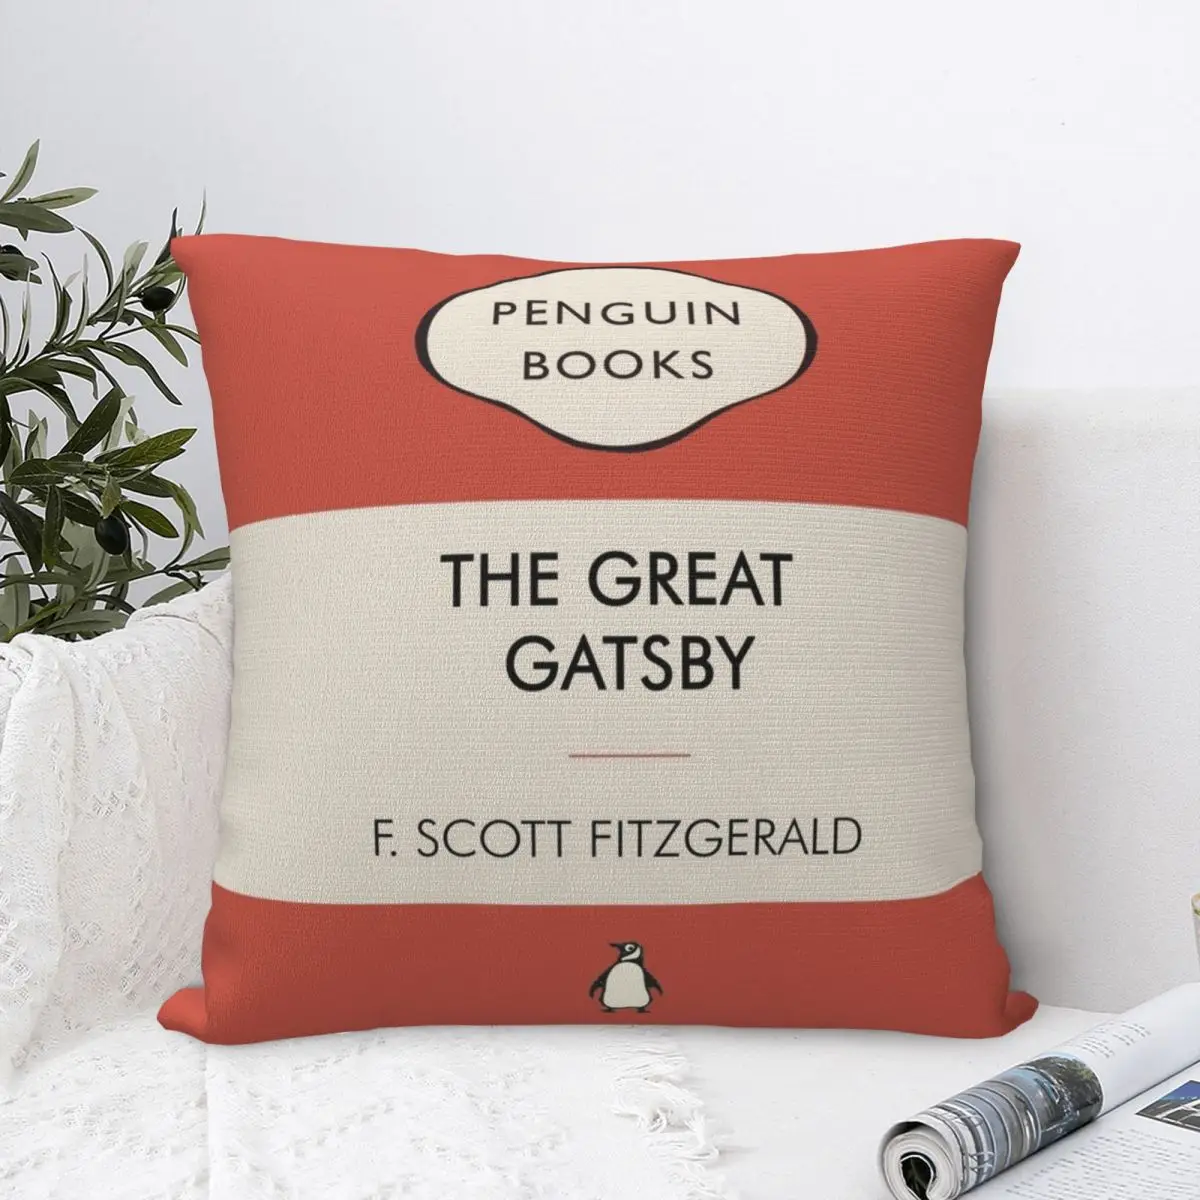 

Kopie Von Penguin Books Pride And Prejudice Jane Austen Square Pillowcase Cushion Cover Comfort Pillow Case Throw Pillow